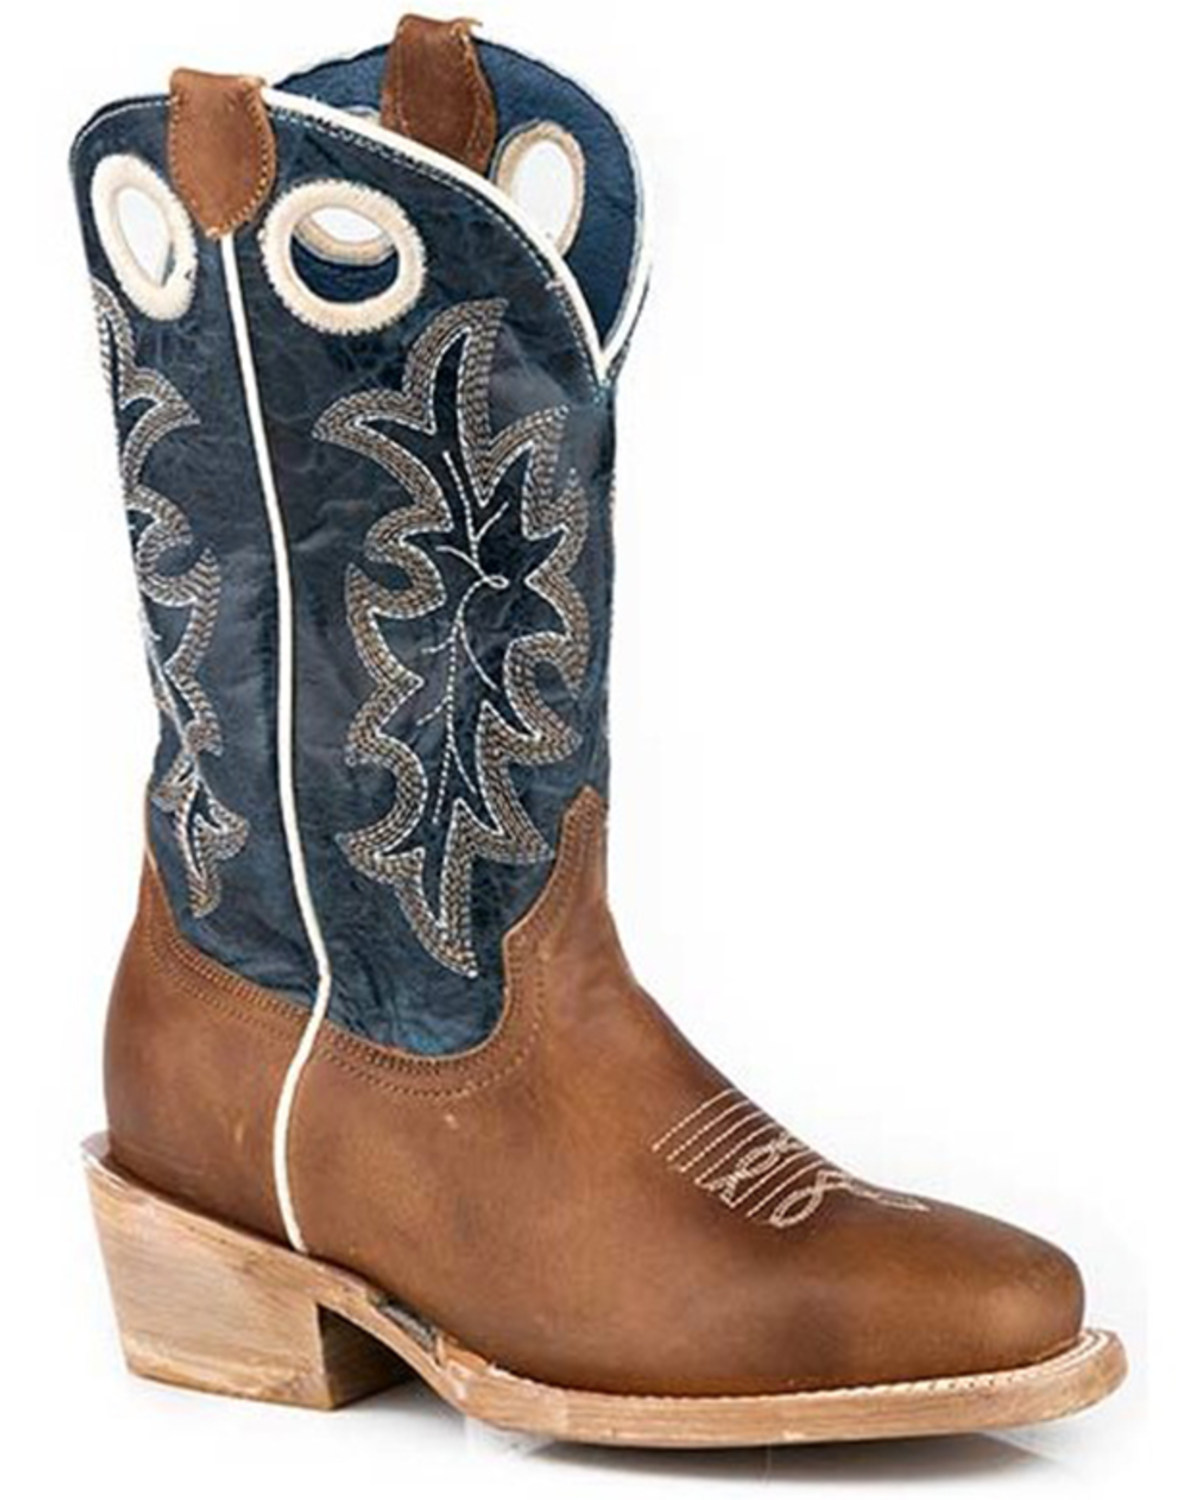 Roper Boys' Ride Em' Cowboy Western Boots - Square Toe